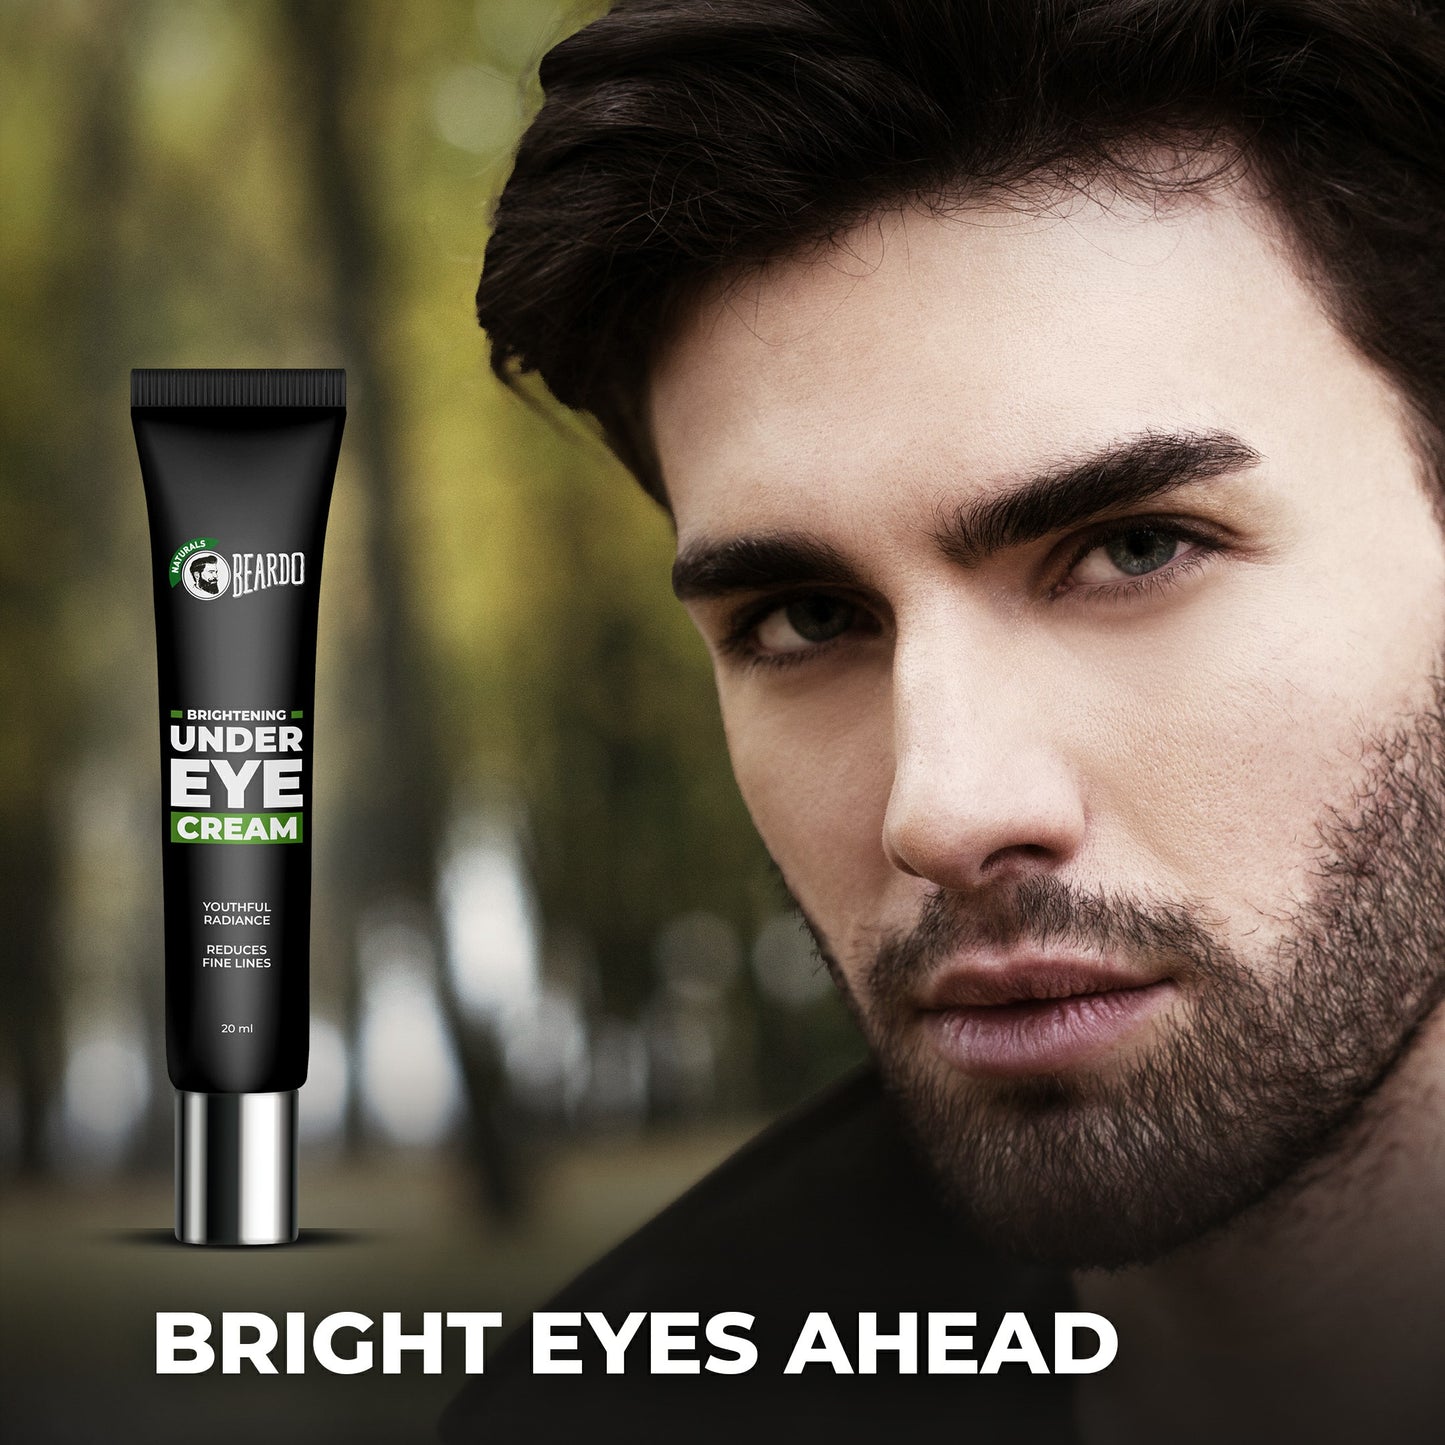 under eye cream for men, bright eyes ahead